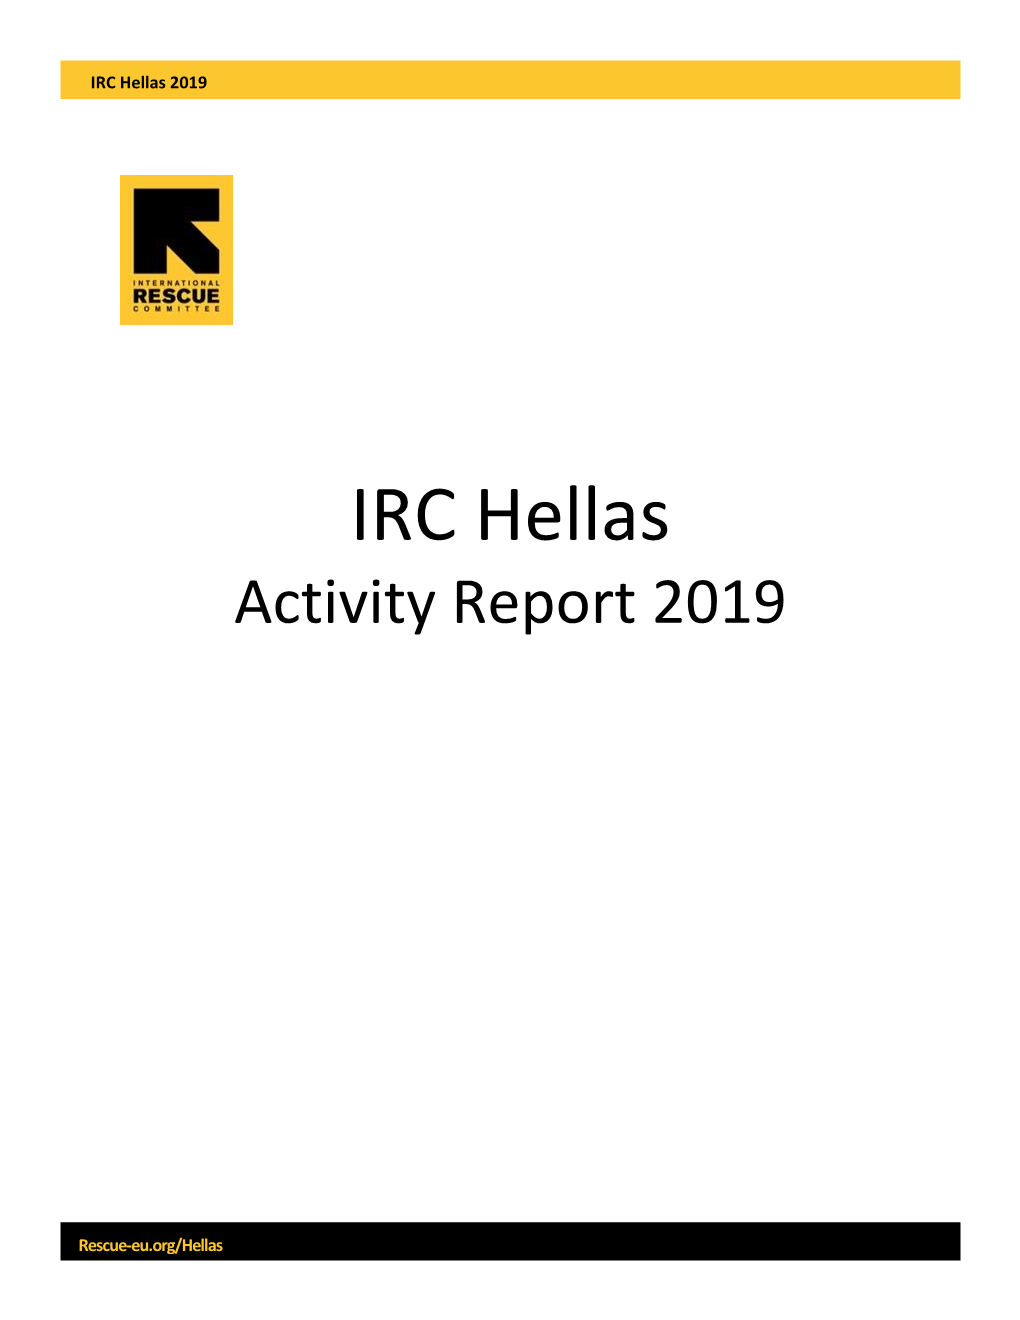 IRC Hellas Annual Report 2019